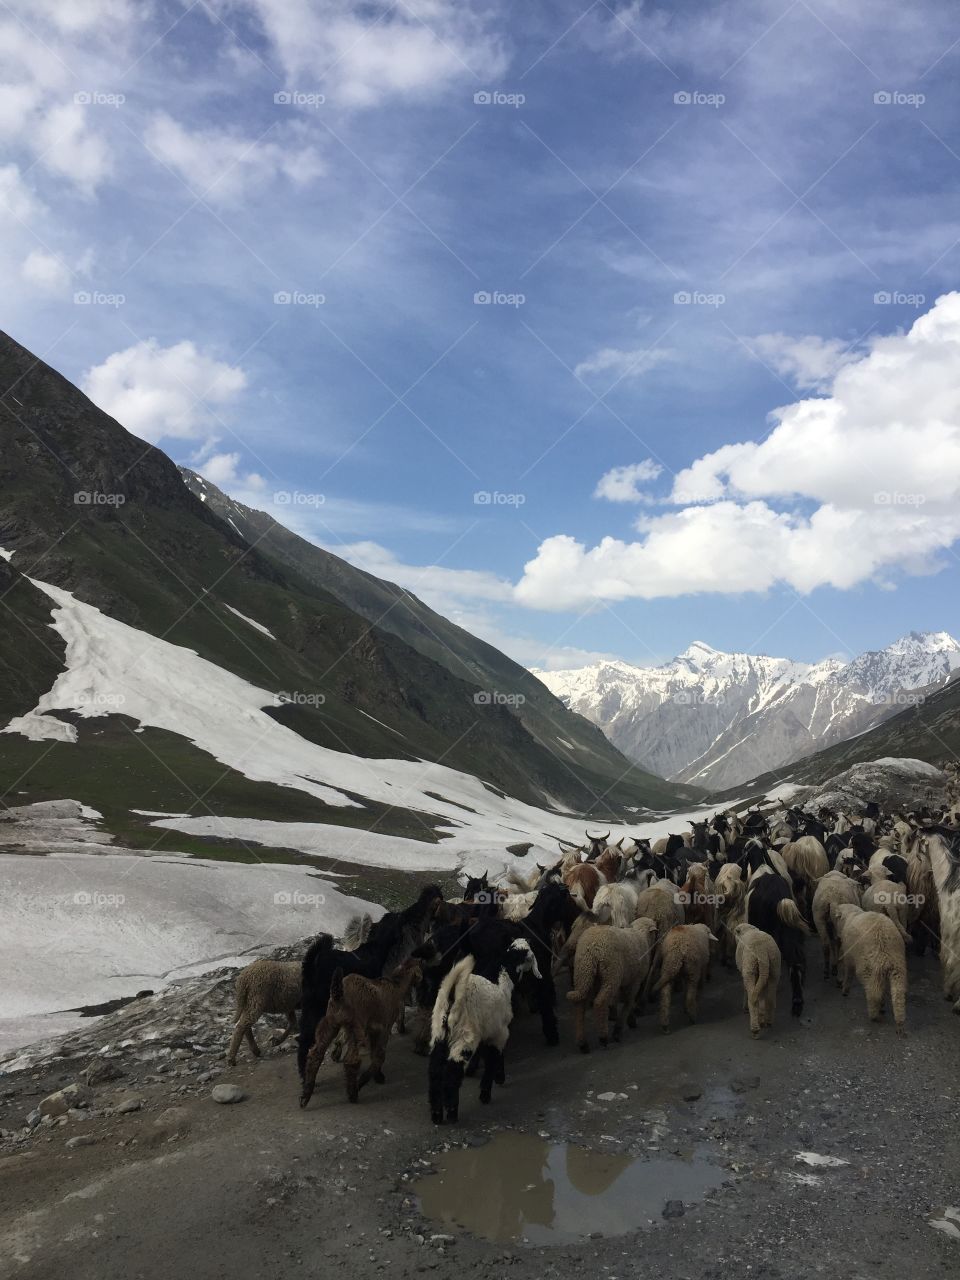 Mountain sheep in Nepal.